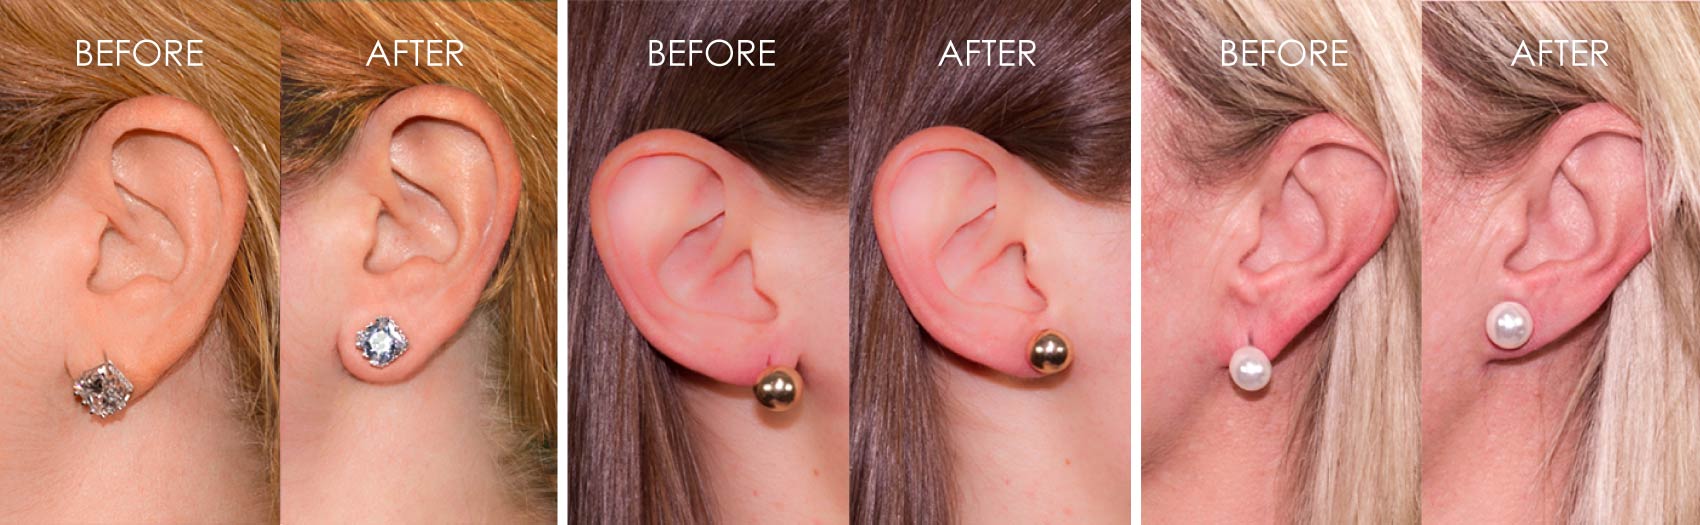 BetterBax - Instant Lift Earring Backs That Keep Your Earrings